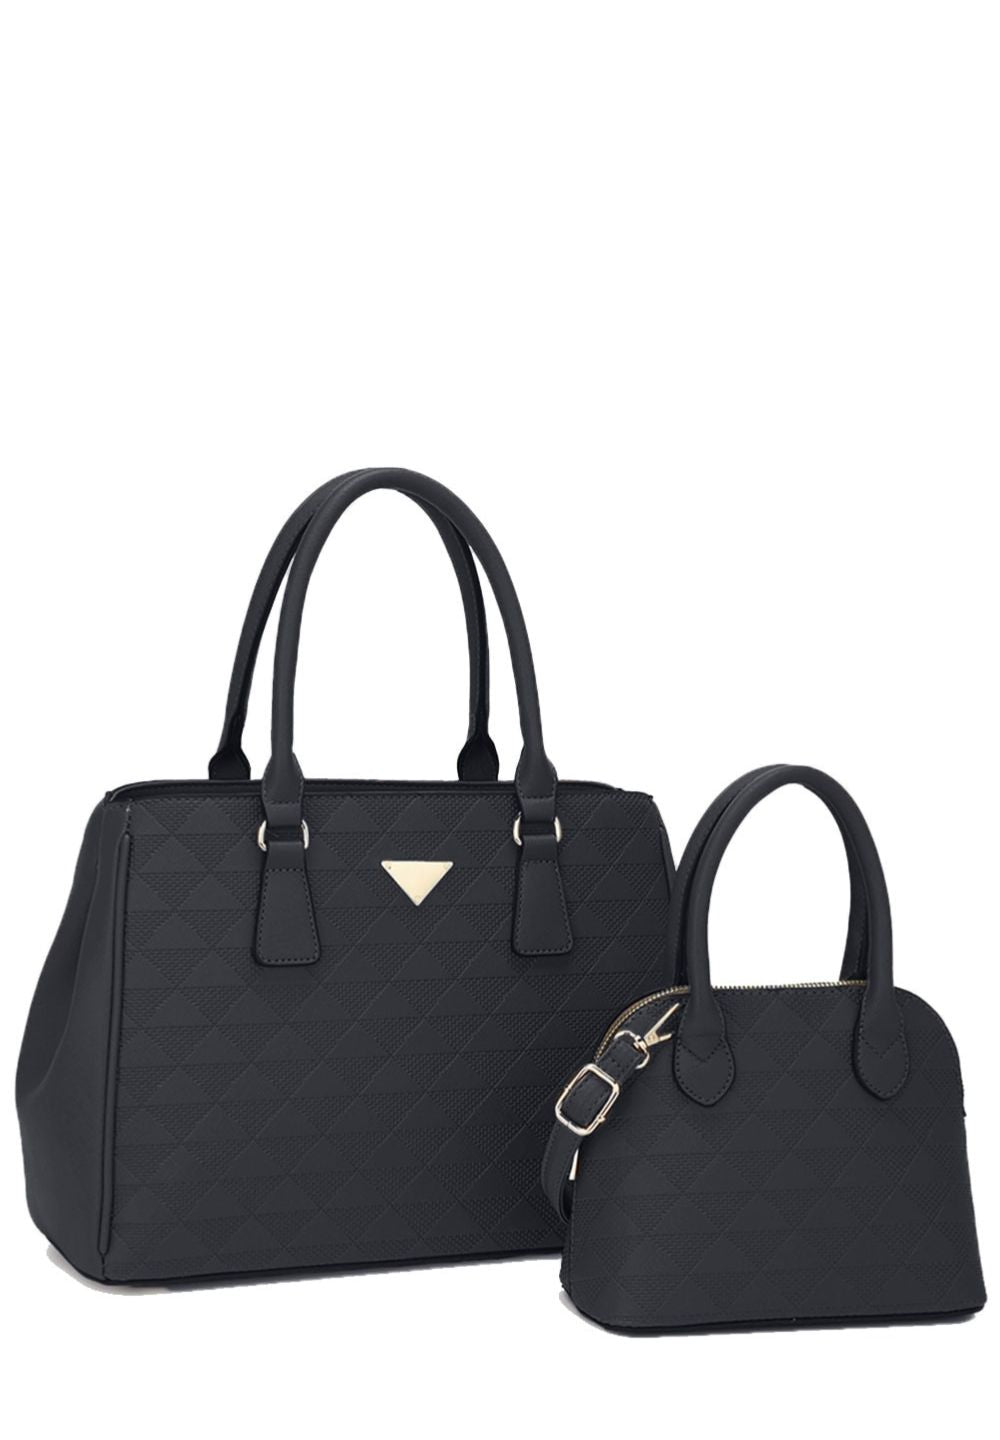 Black 2in1 Triangular Pattern Satchel Handbag